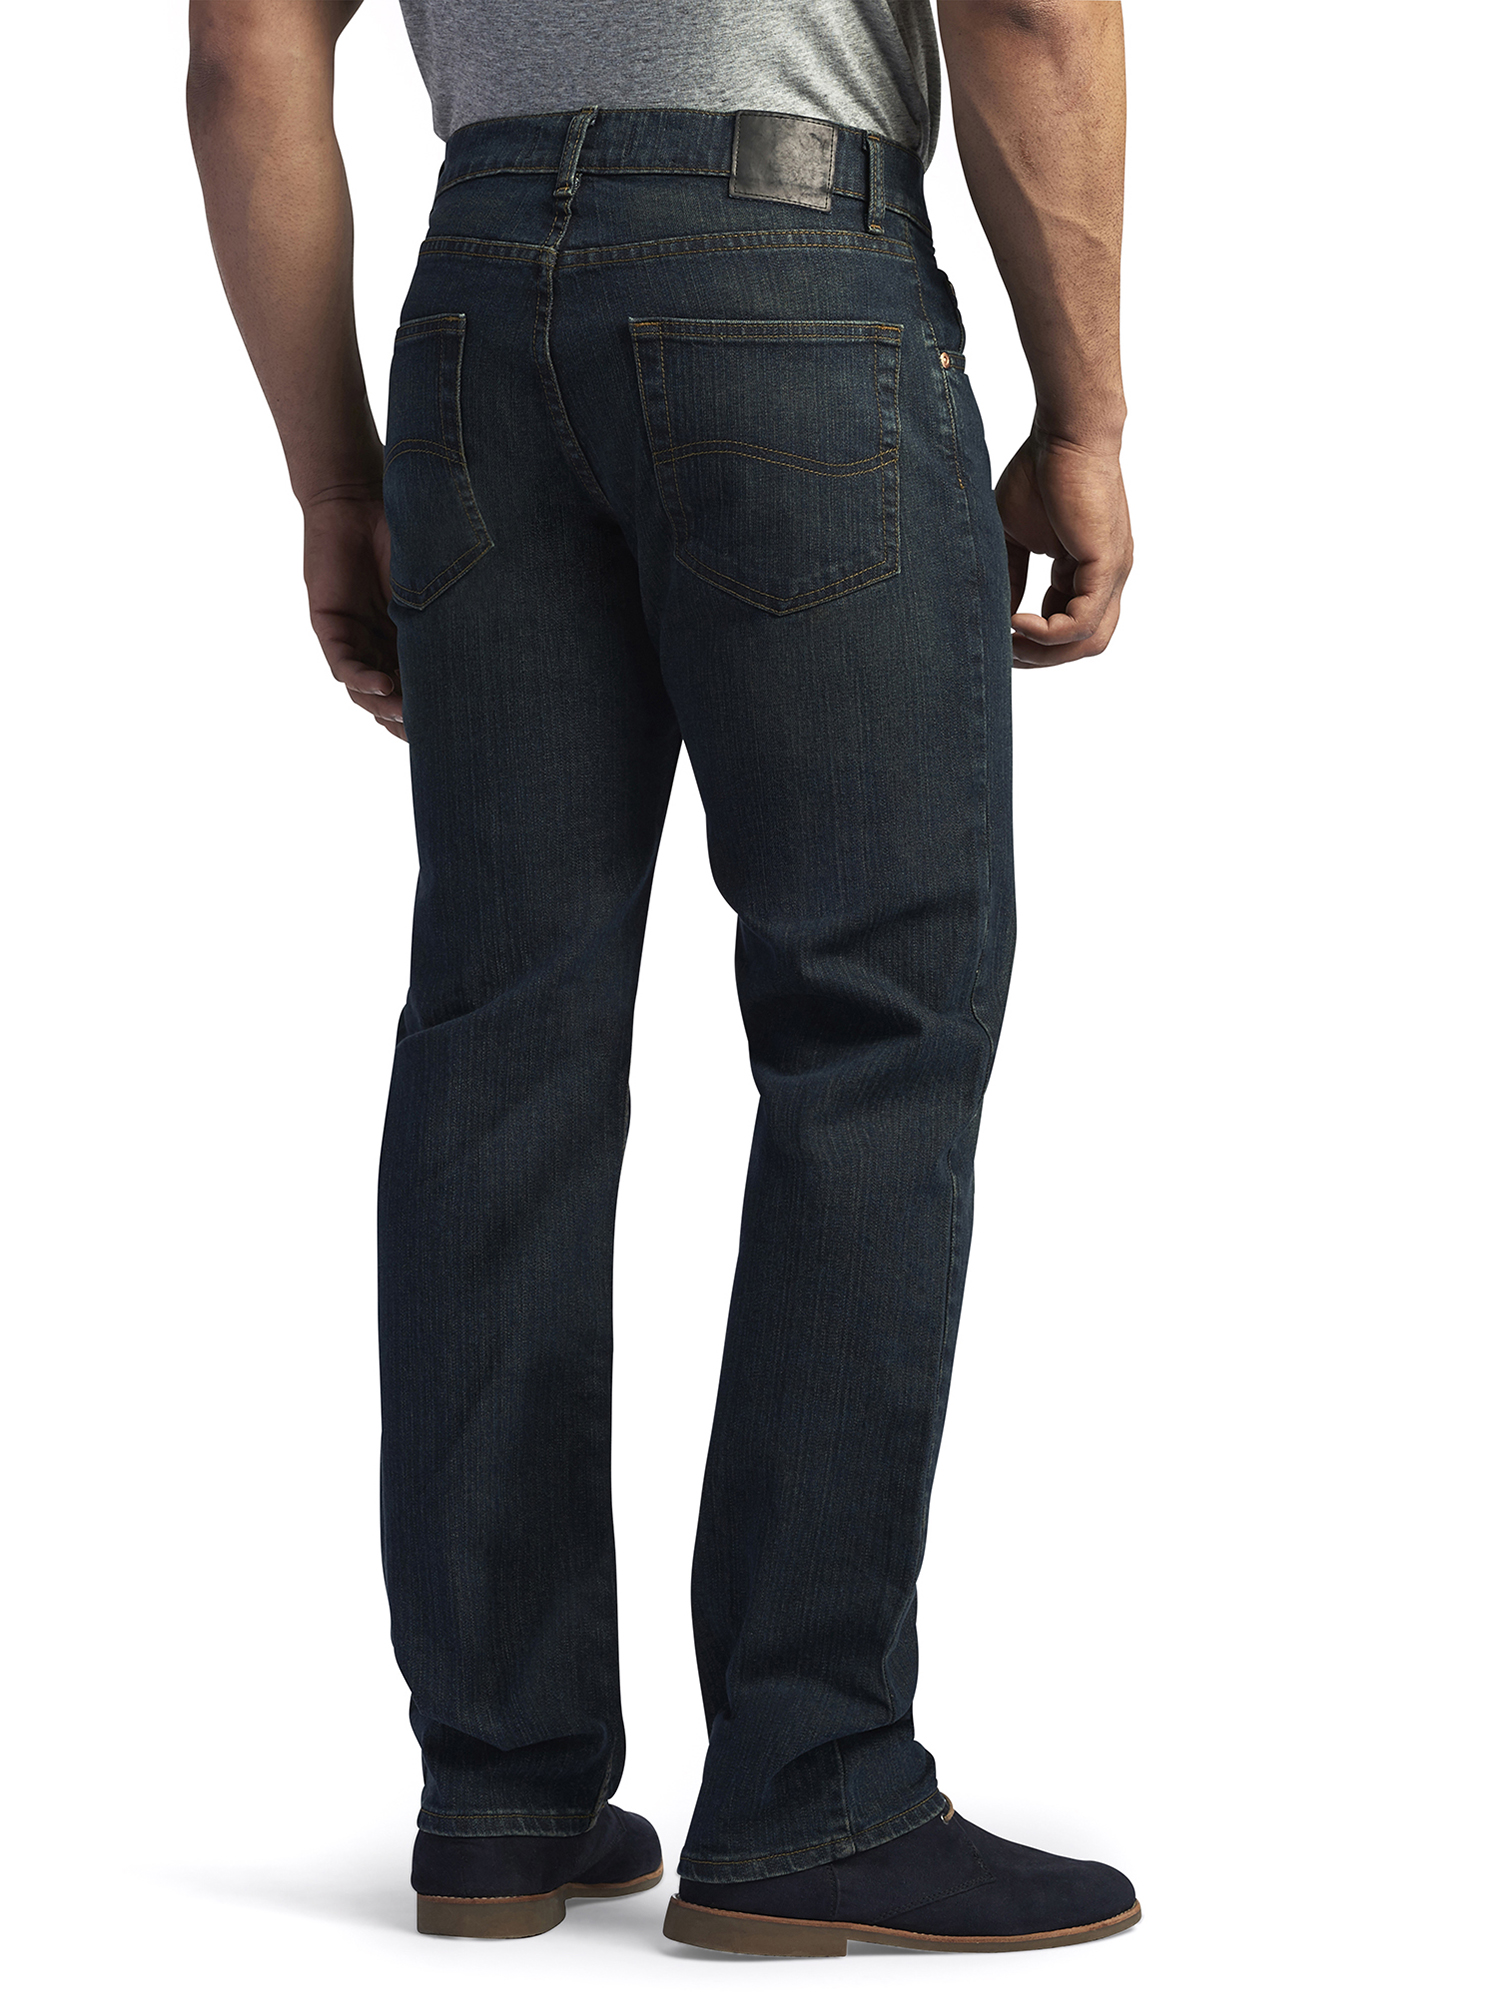 Lee Men's Regular Fit Straight Leg Stretch Jeans - image 2 of 2